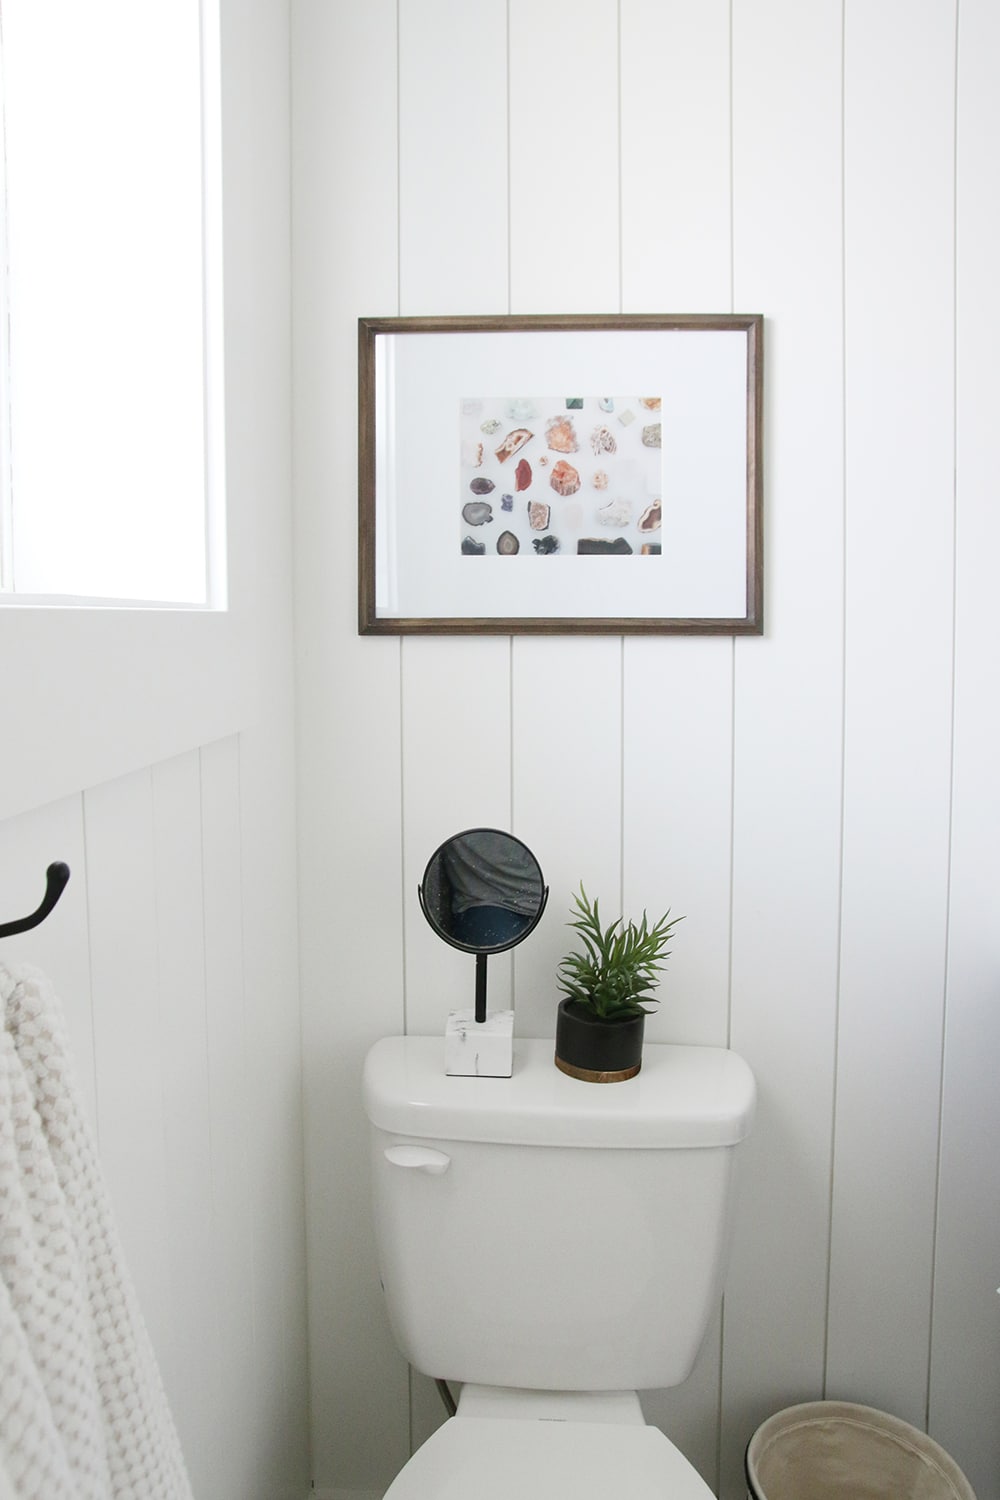 Details about   Modern Simple Pure Black Single Towel Bars Vintage Toilet Bathroom Towel Holder